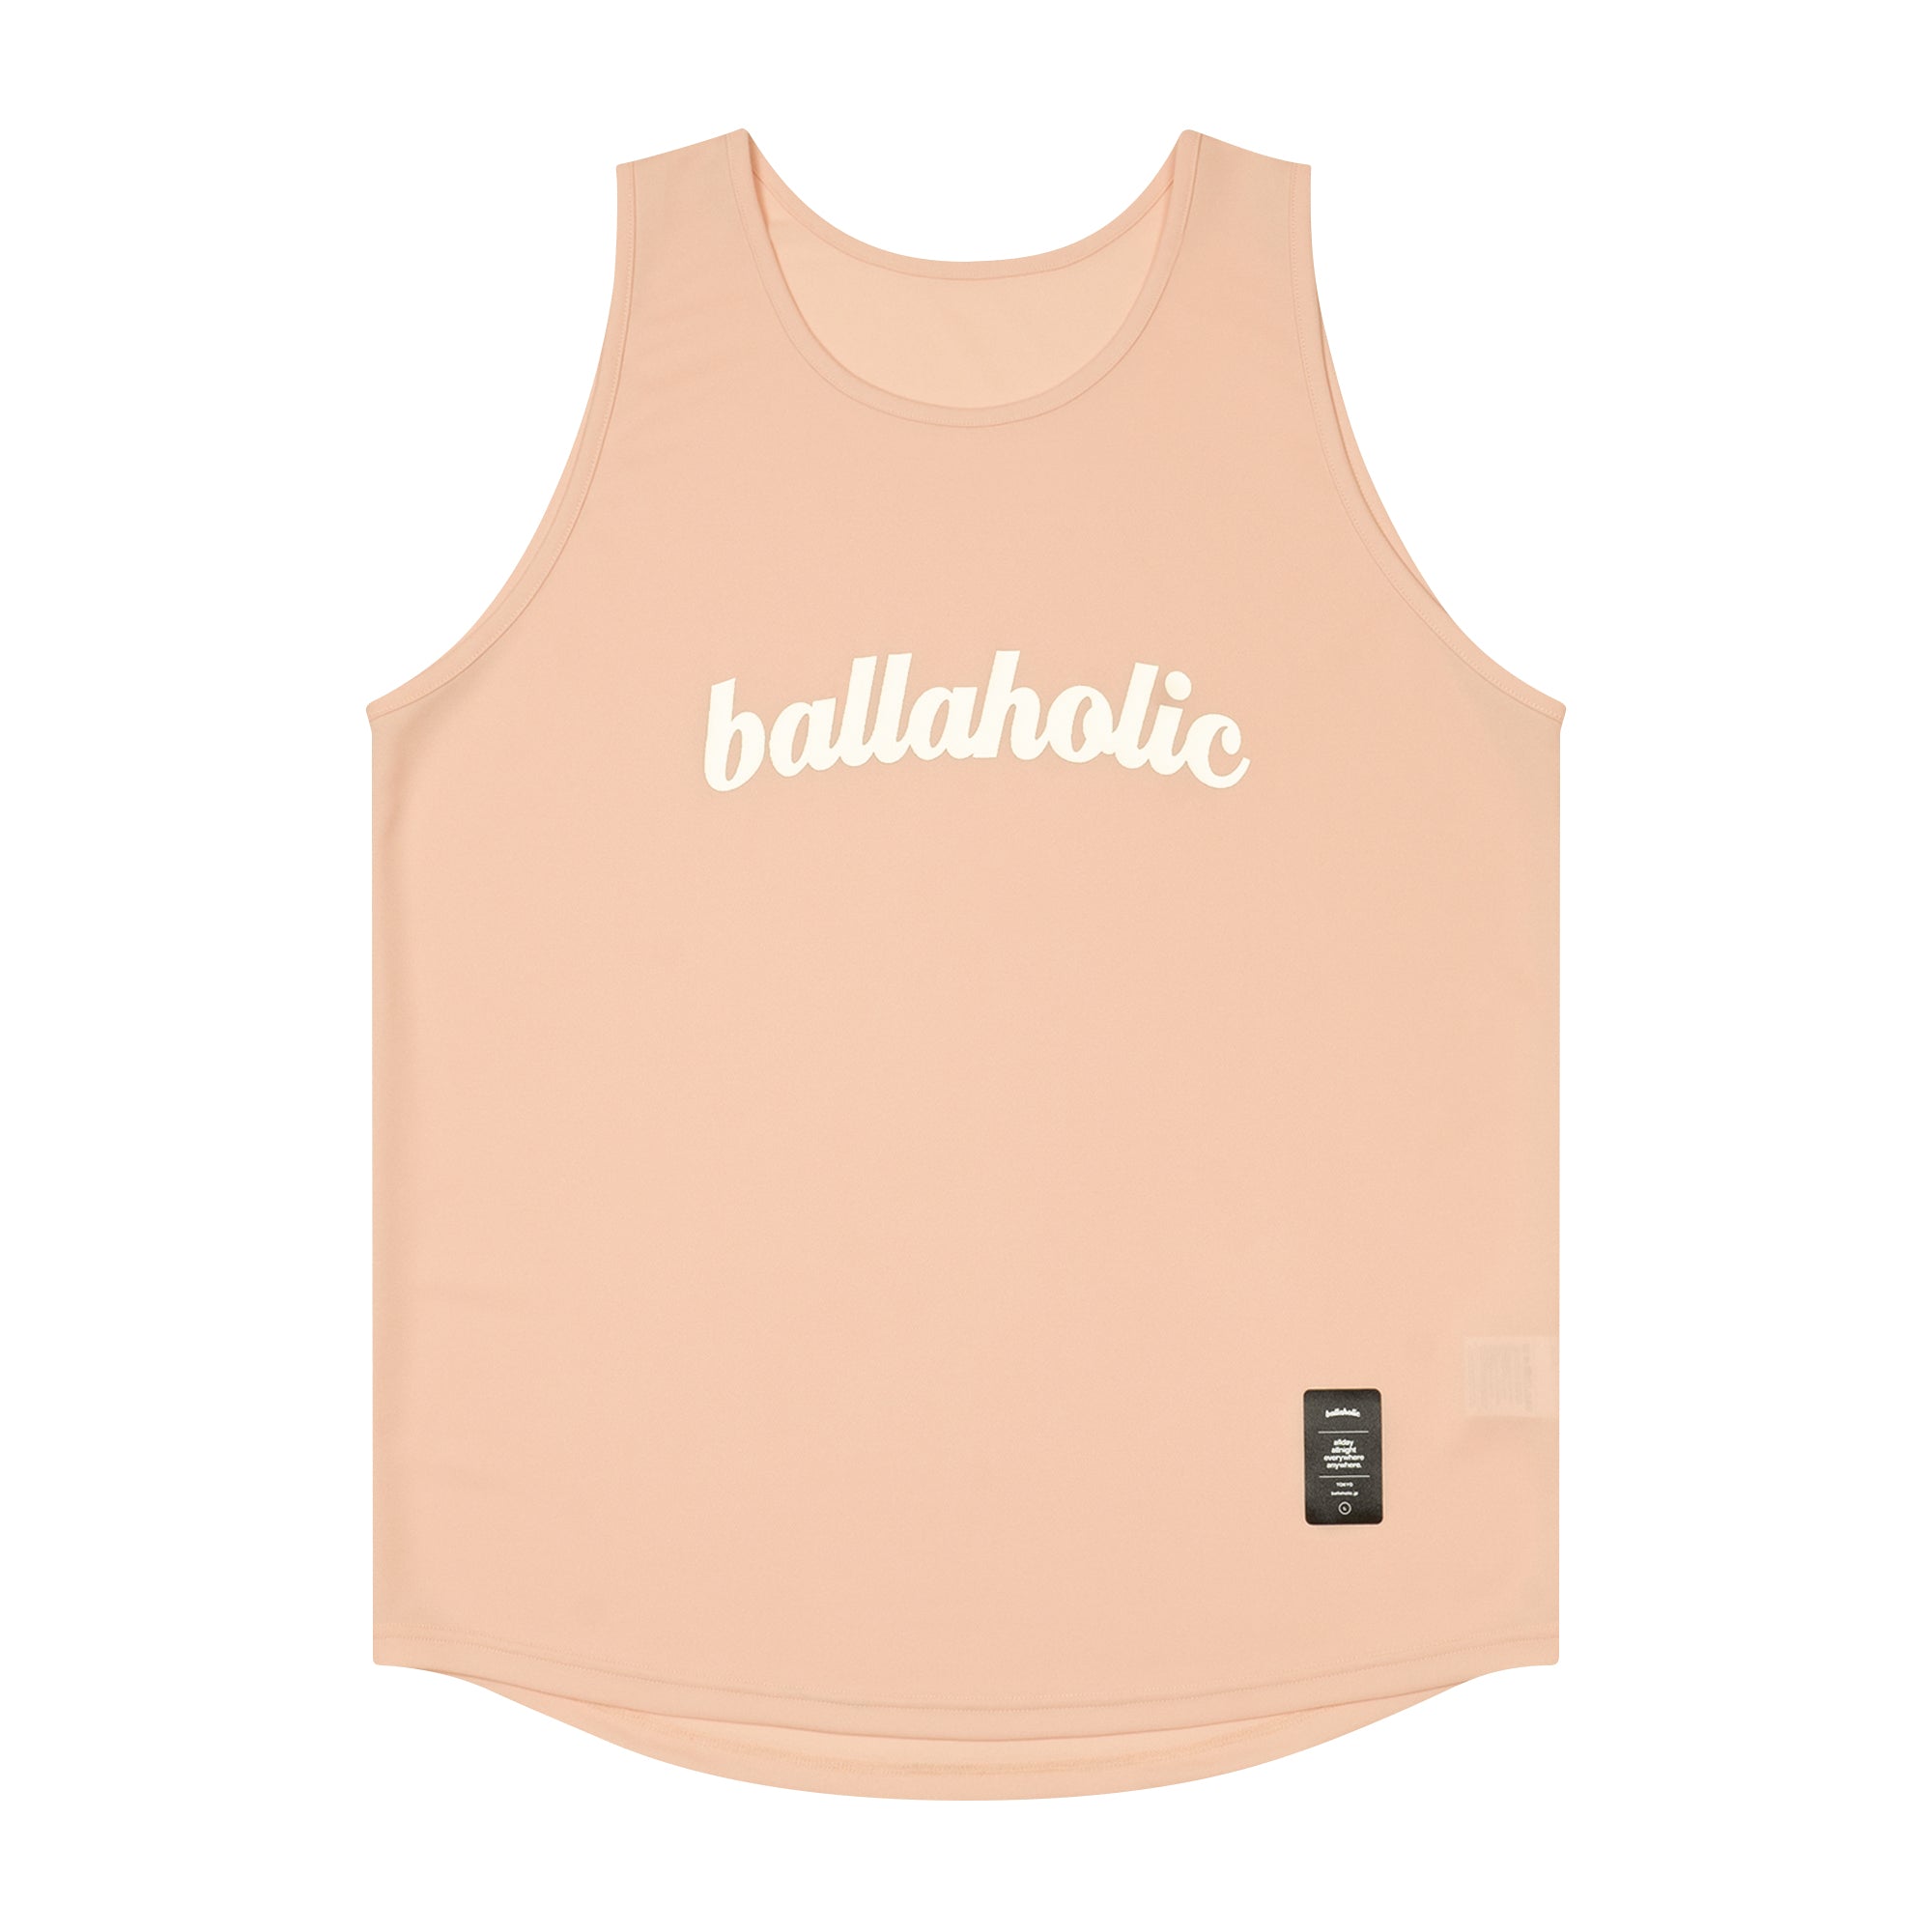 Ballaholic Logo Tank Top (black white) ボーラホリック タンクトップ